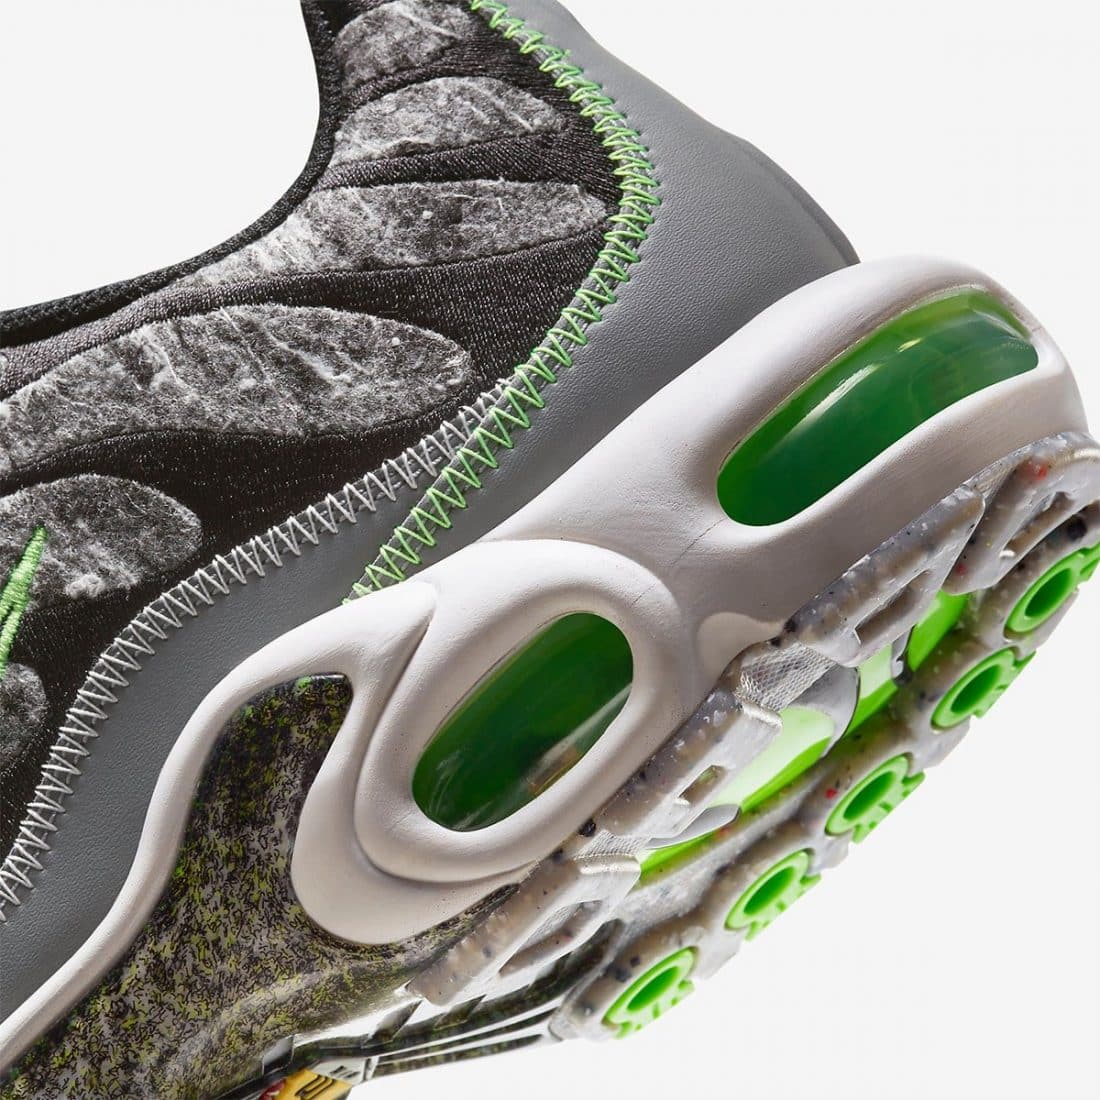 Nike Air Max Plus Essential Crater Green